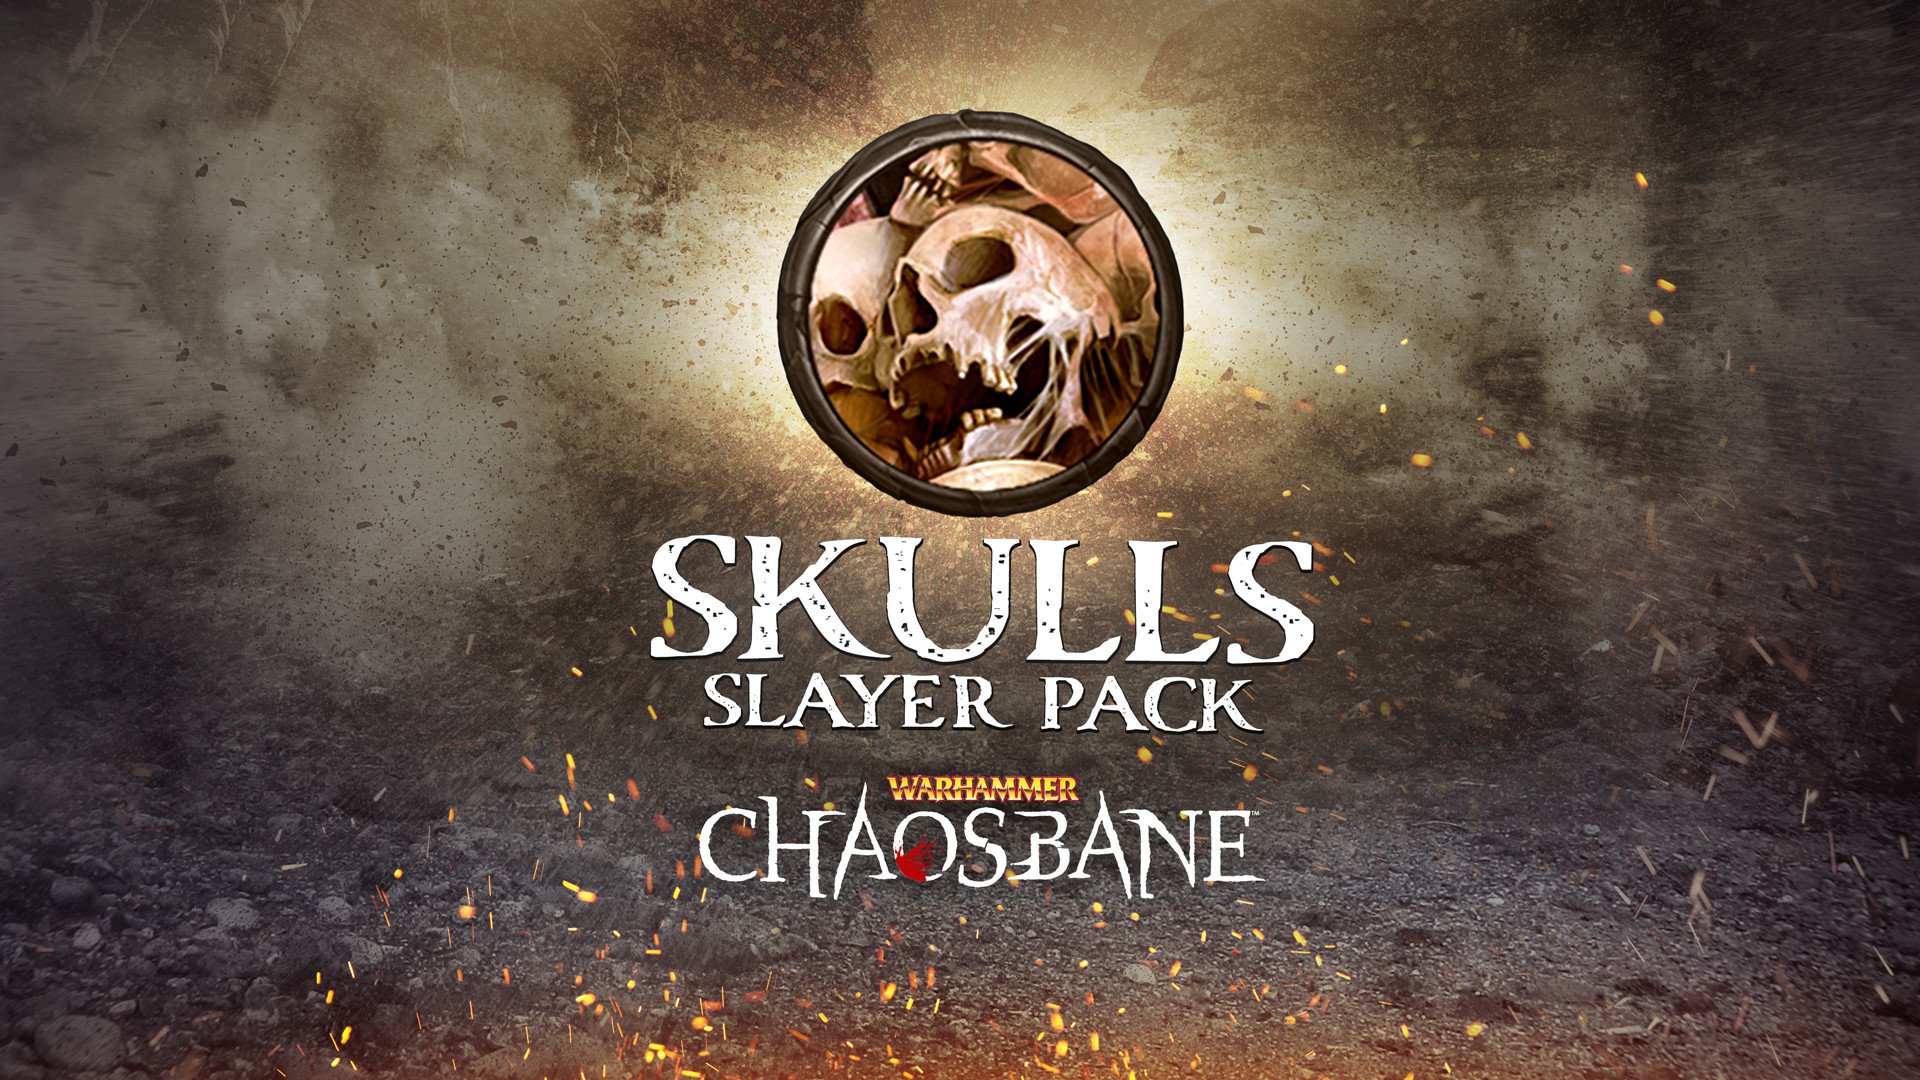 download free warhammer chaosbane slayer edition